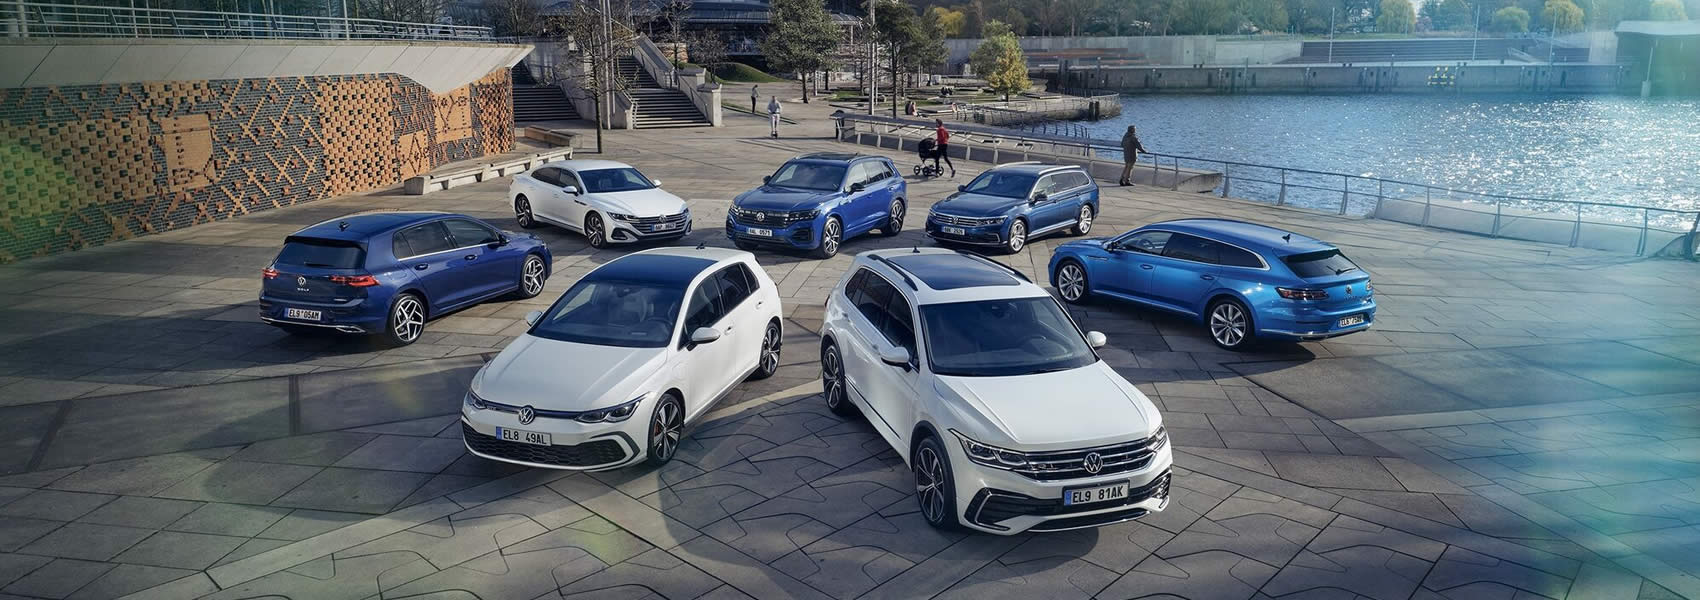 Volkswagen osobní vozy